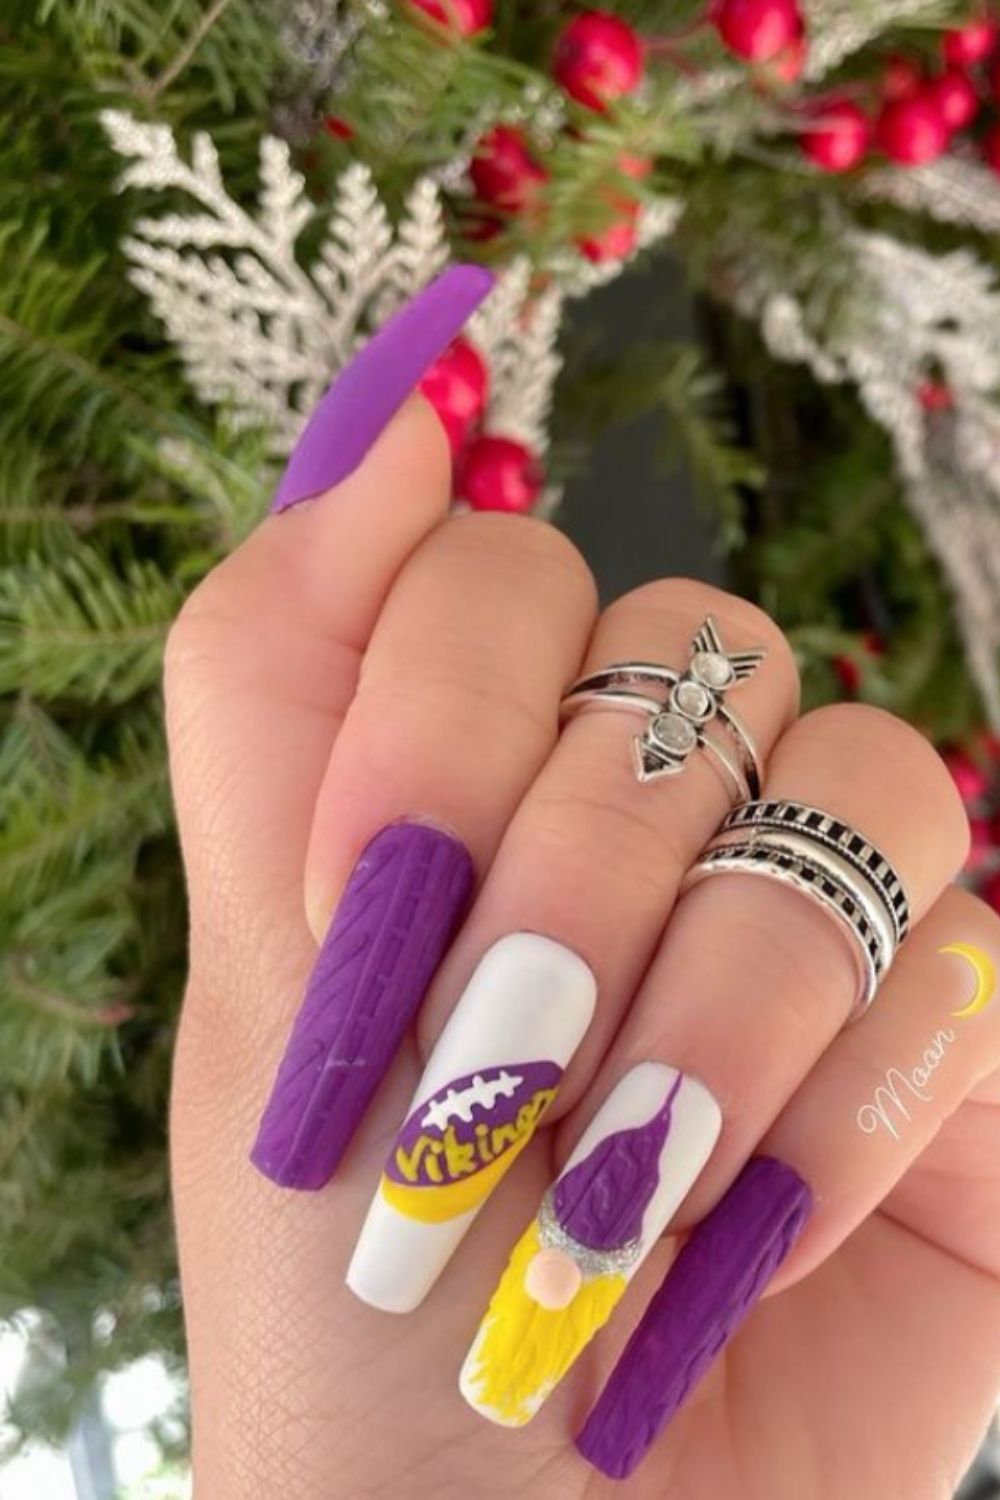 White and purple coffin nails designs